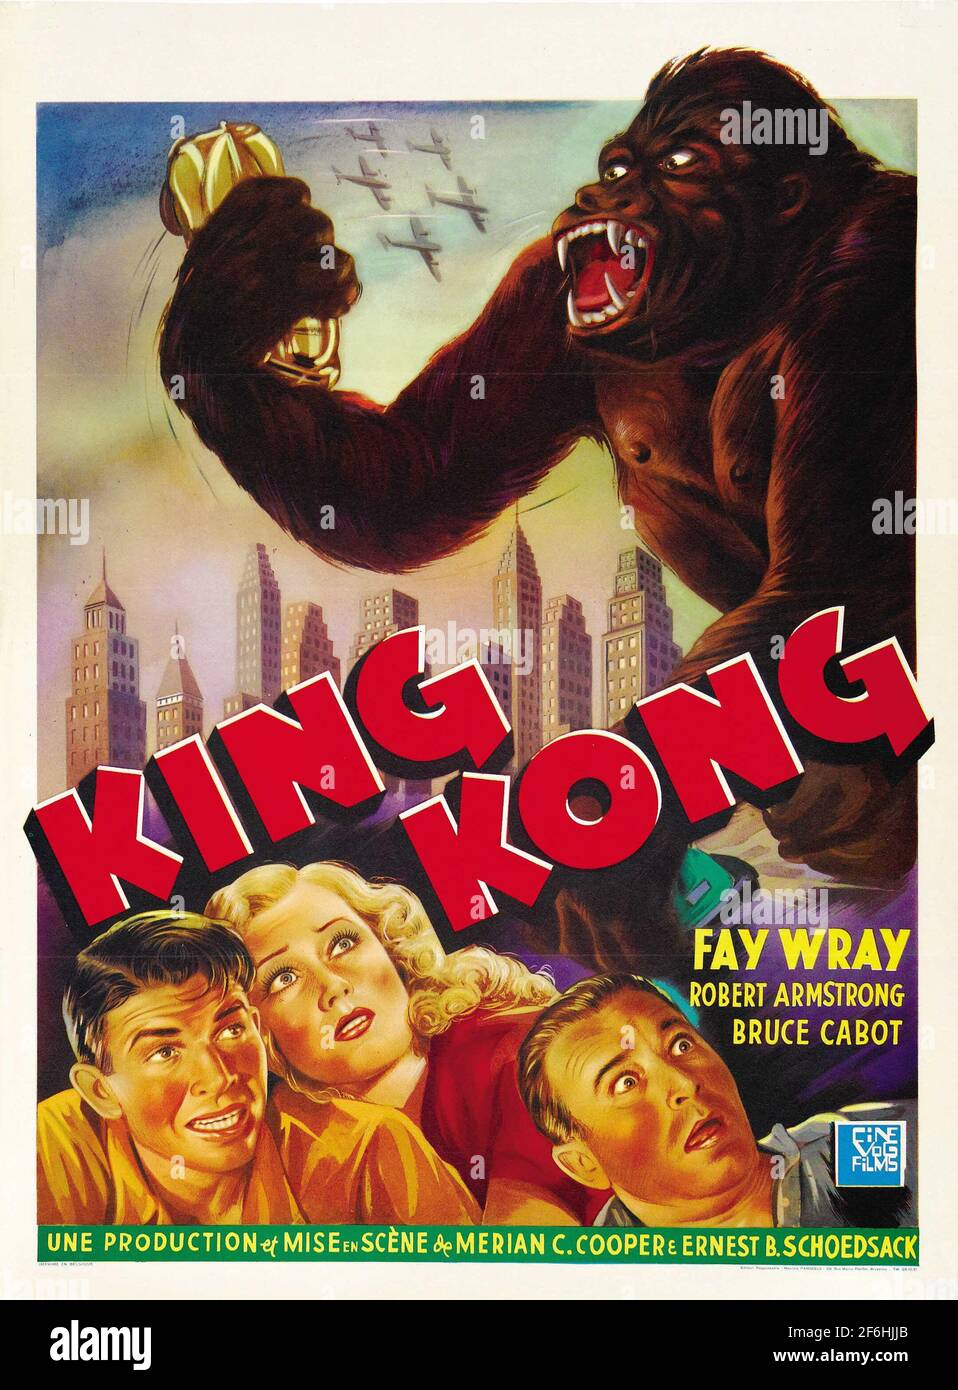 King Kong, poster del film 1933. Con Fay Wray, Bruce Cabot, Robert Armstrong, Frank Reicher. Avventura / Fantasy / azione / Romance. Foto Stock